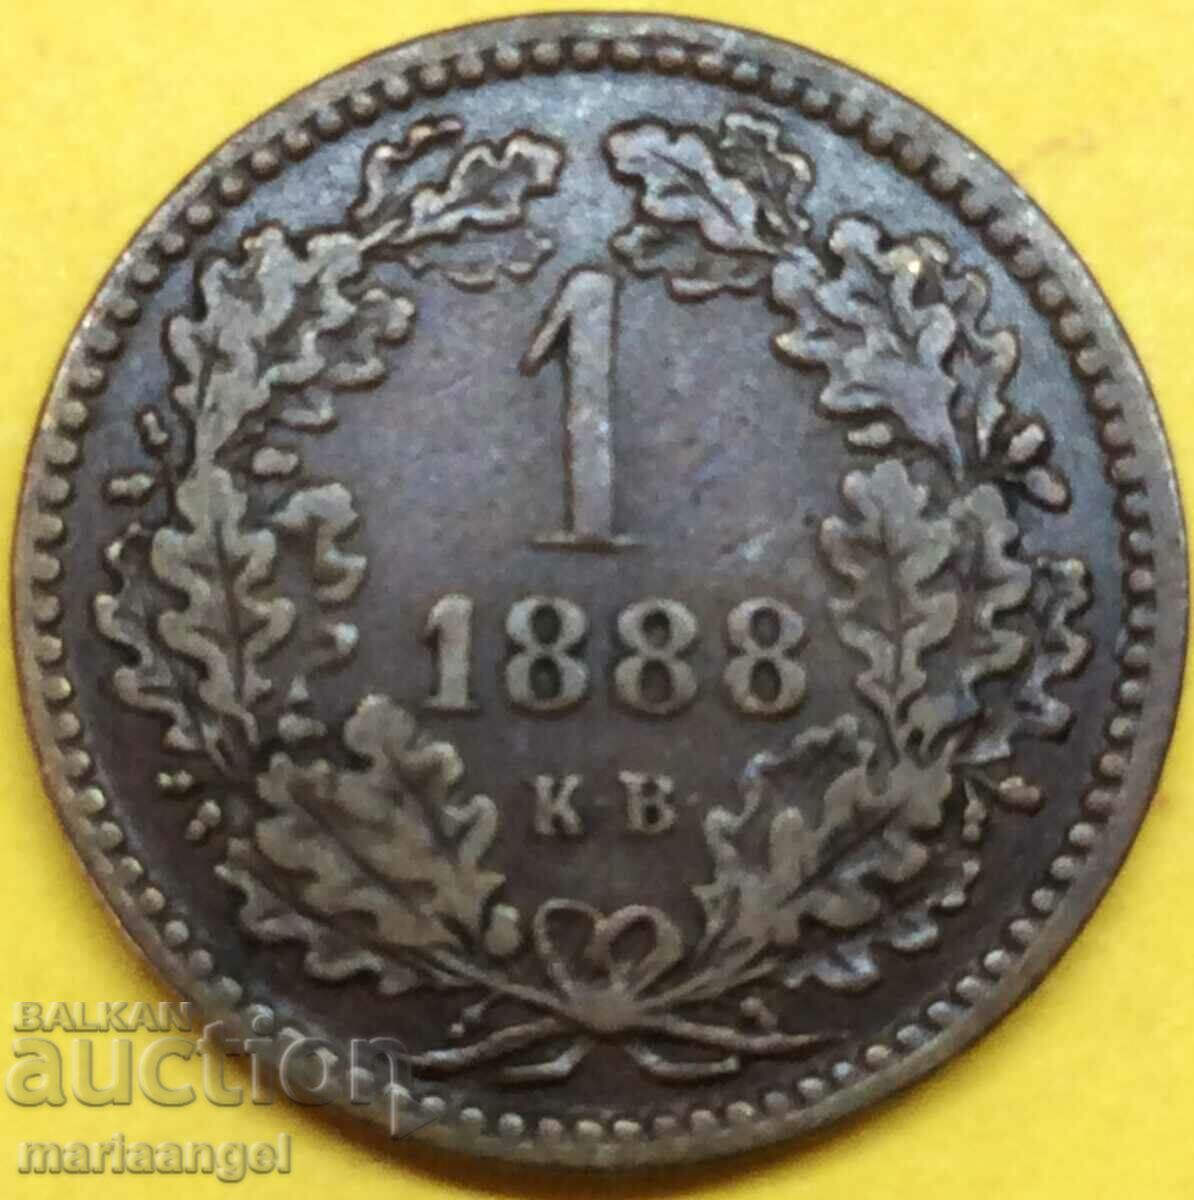 Hungary 1 Kreuzer 1888 KV - rare year